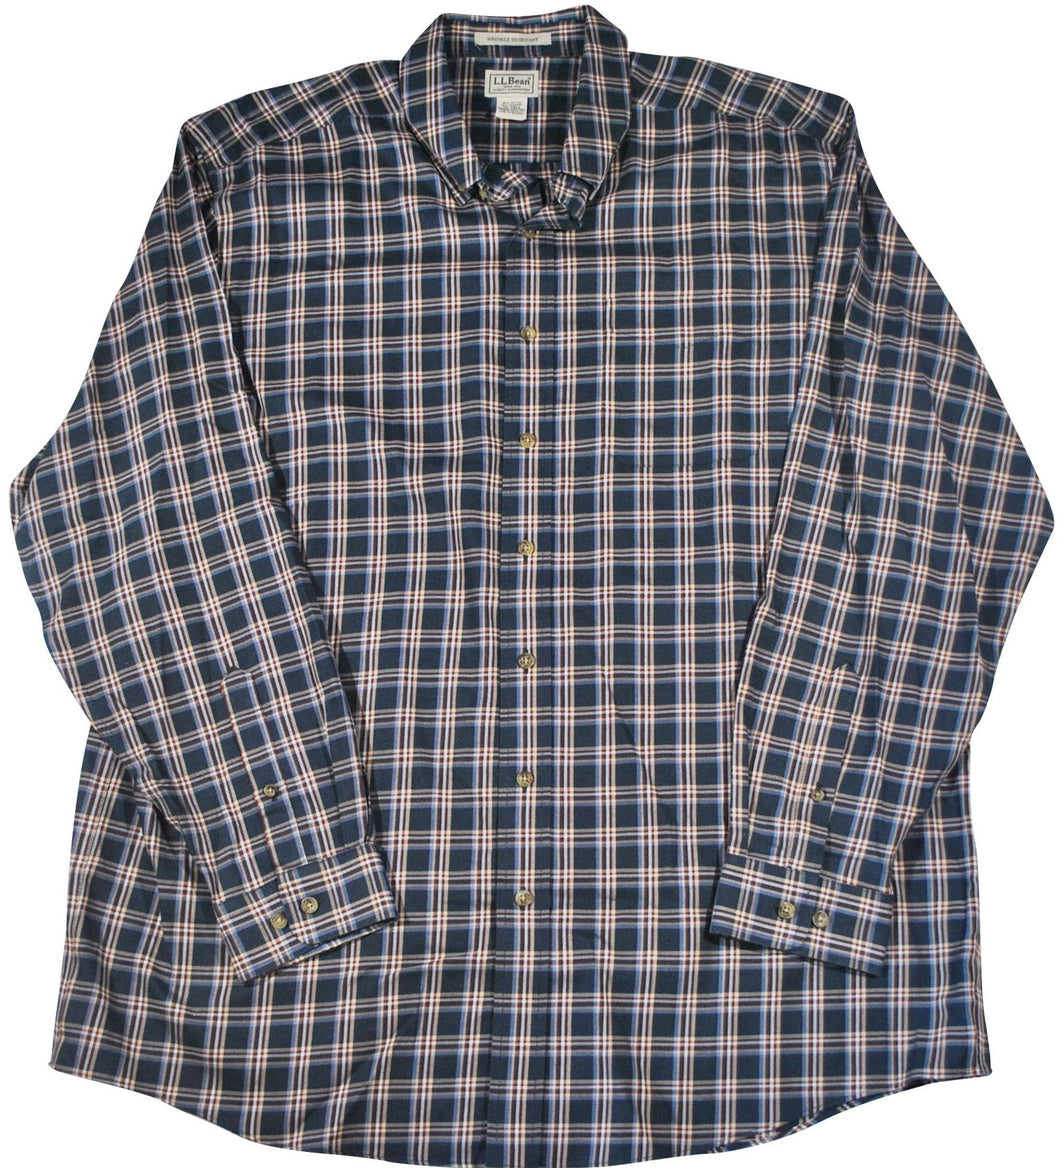 Vintage L.L. Bean Long Sleeve Button Shirt Size X-Large(Tall)